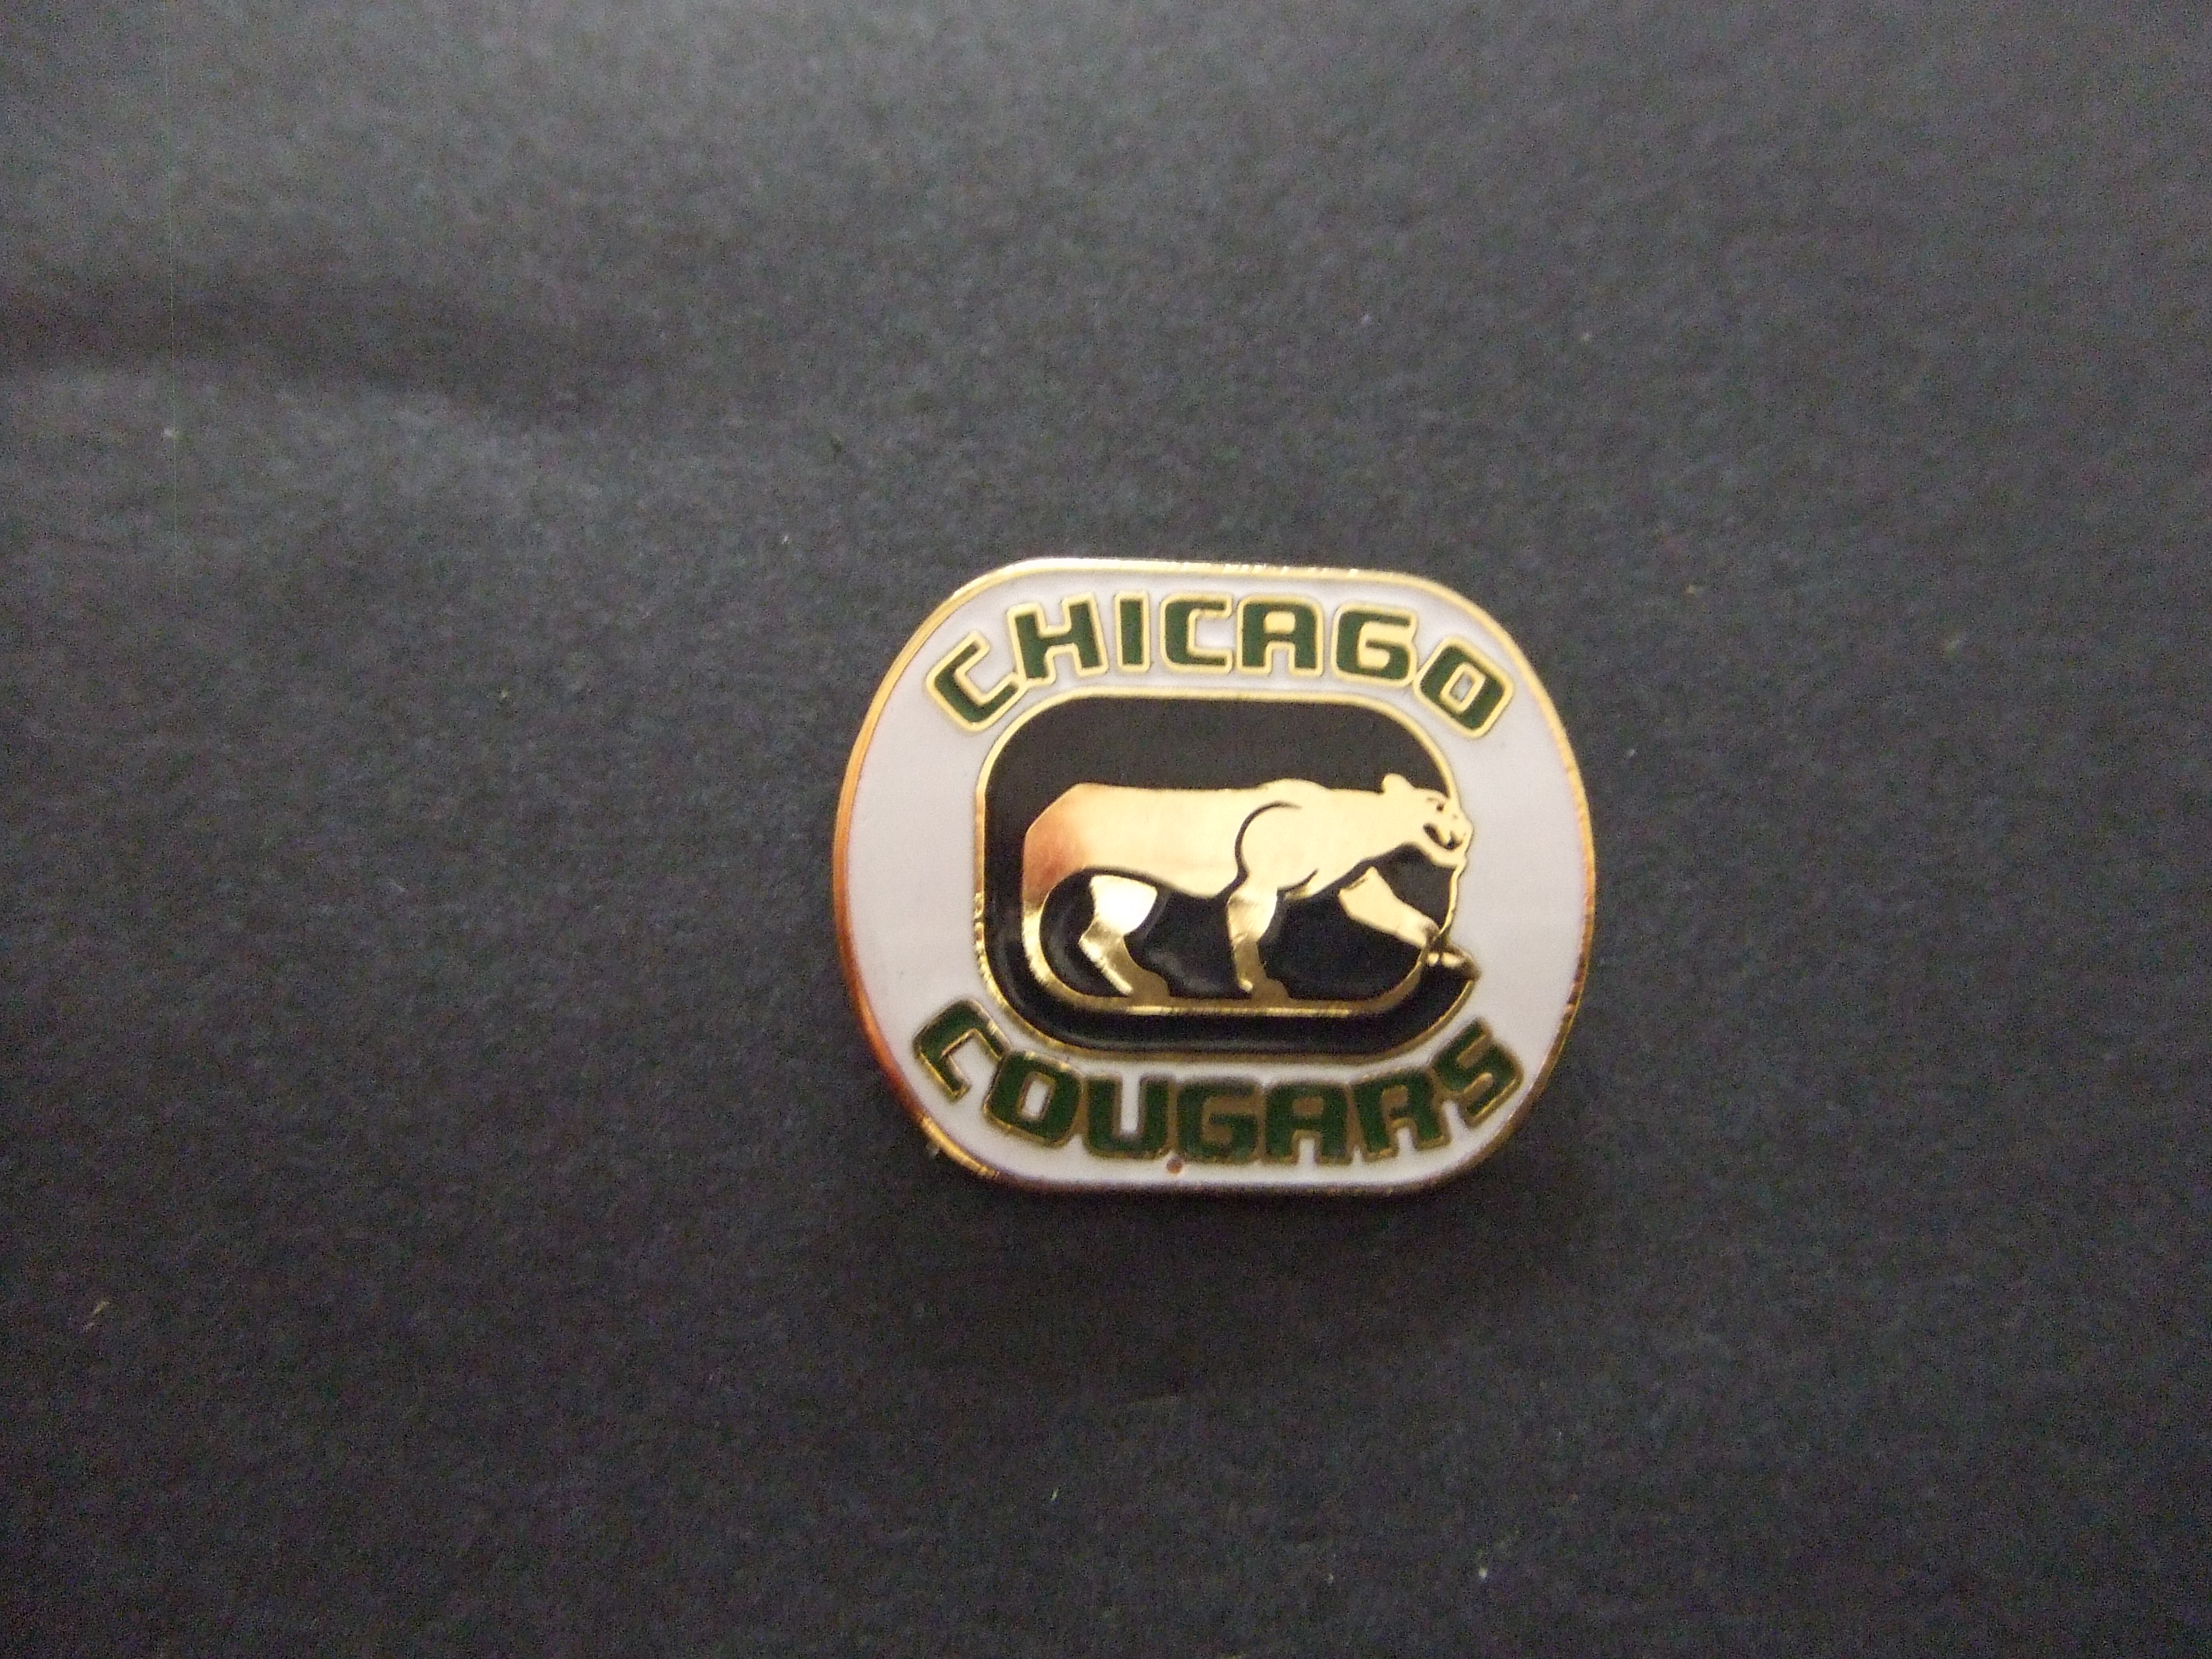 Chicago Cougars Illinois ijshockeyclub 